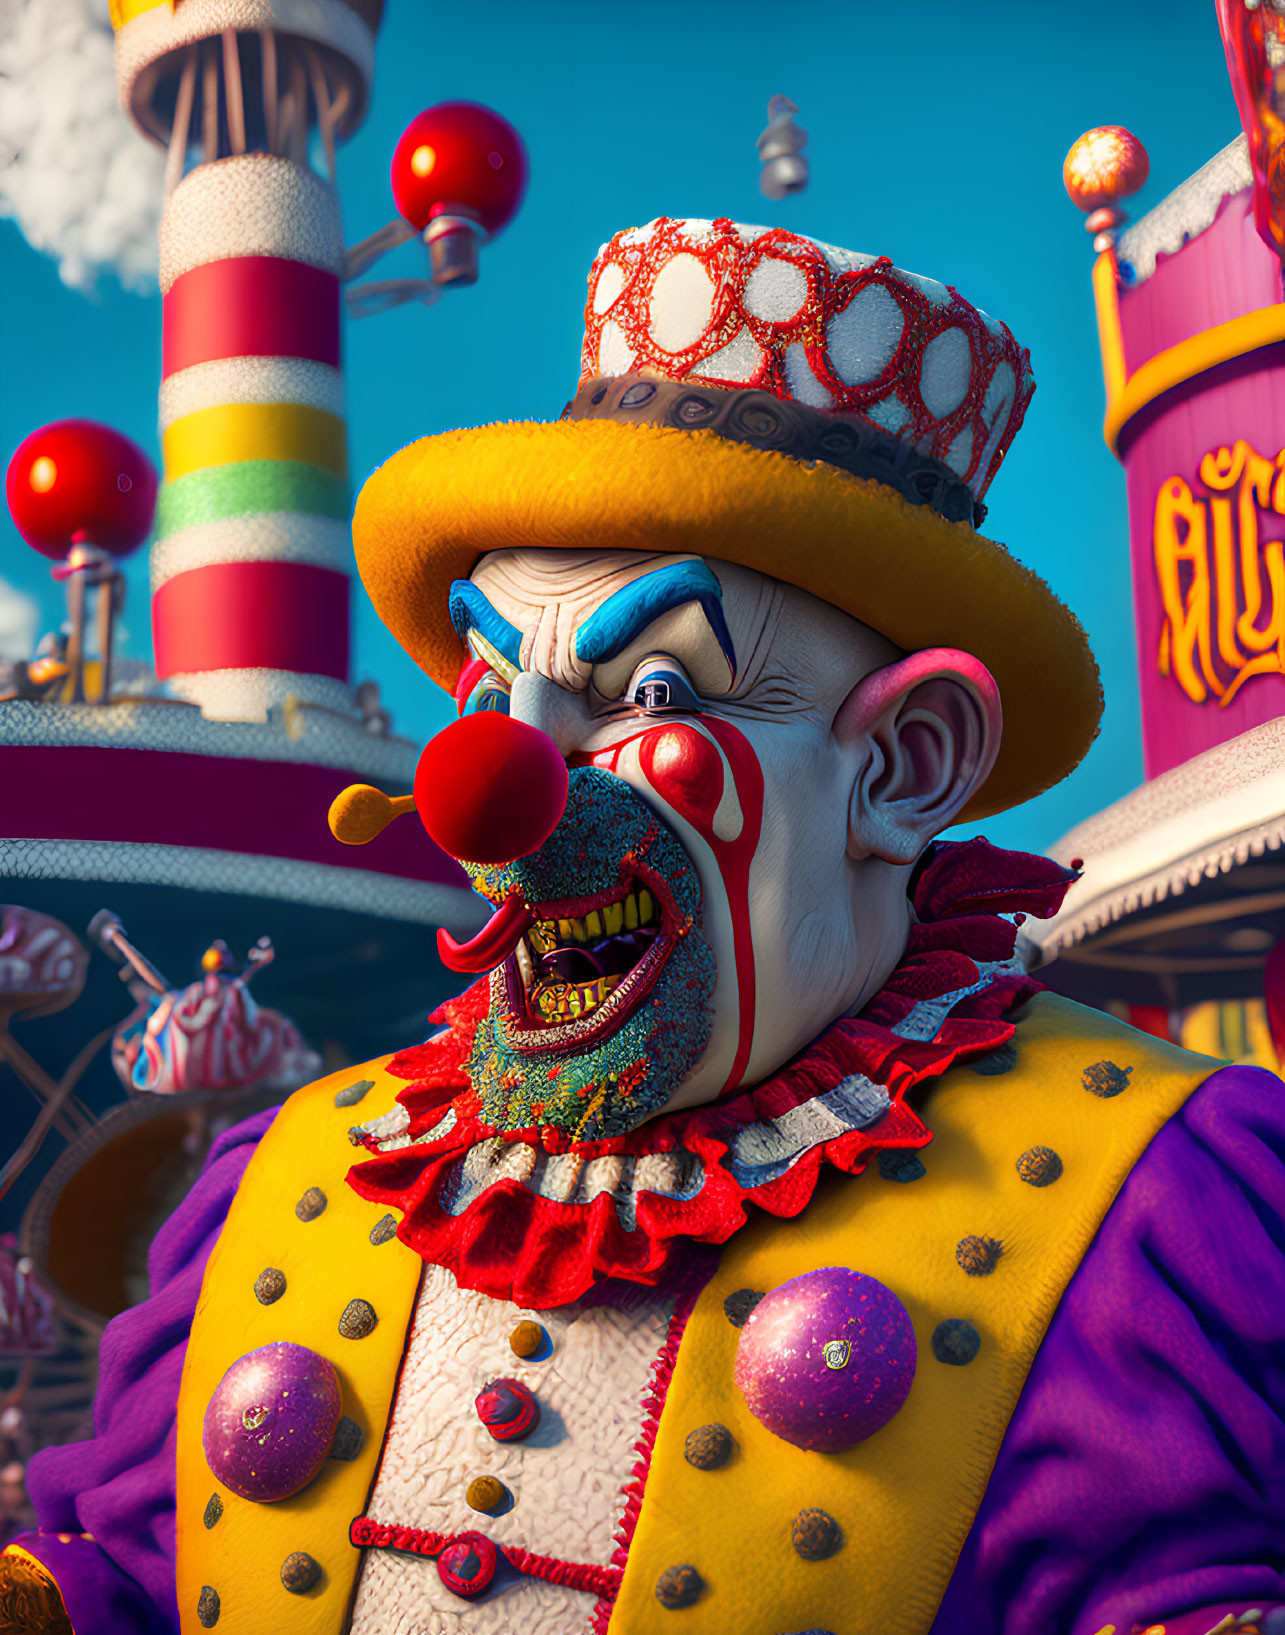 Vibrant 3D clown rendering in circus setting